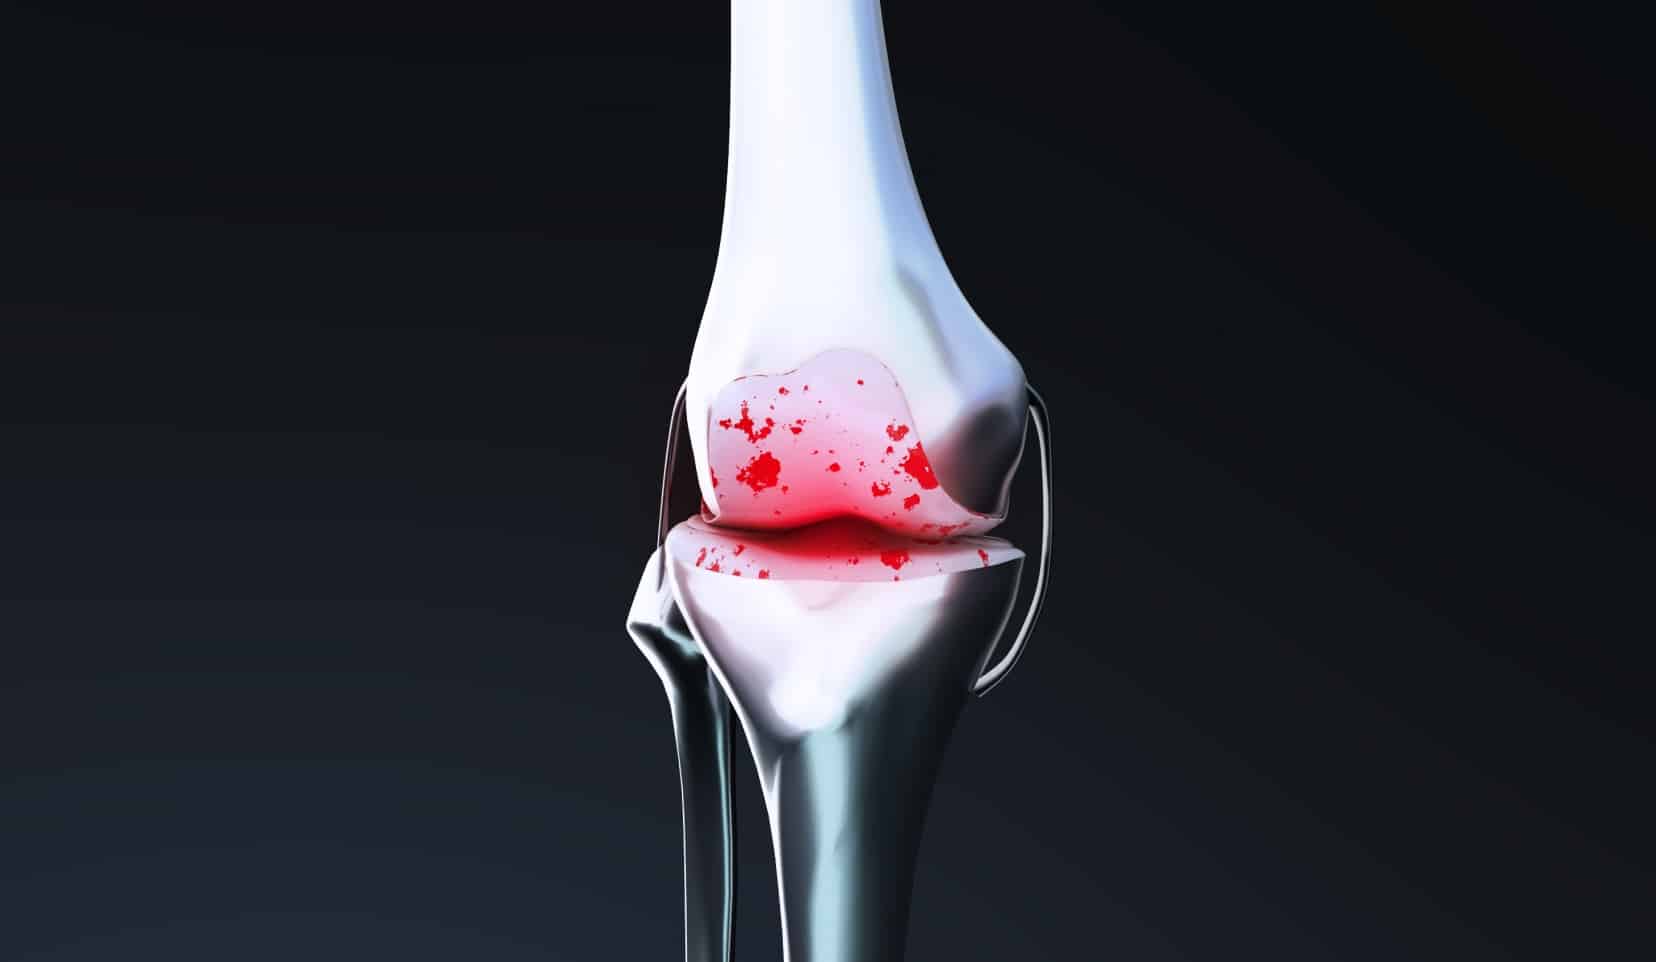 Prothèse totale genou, orthopédiste | spécialiste orthopédiste | Bois-Guillaume | Dr Polle